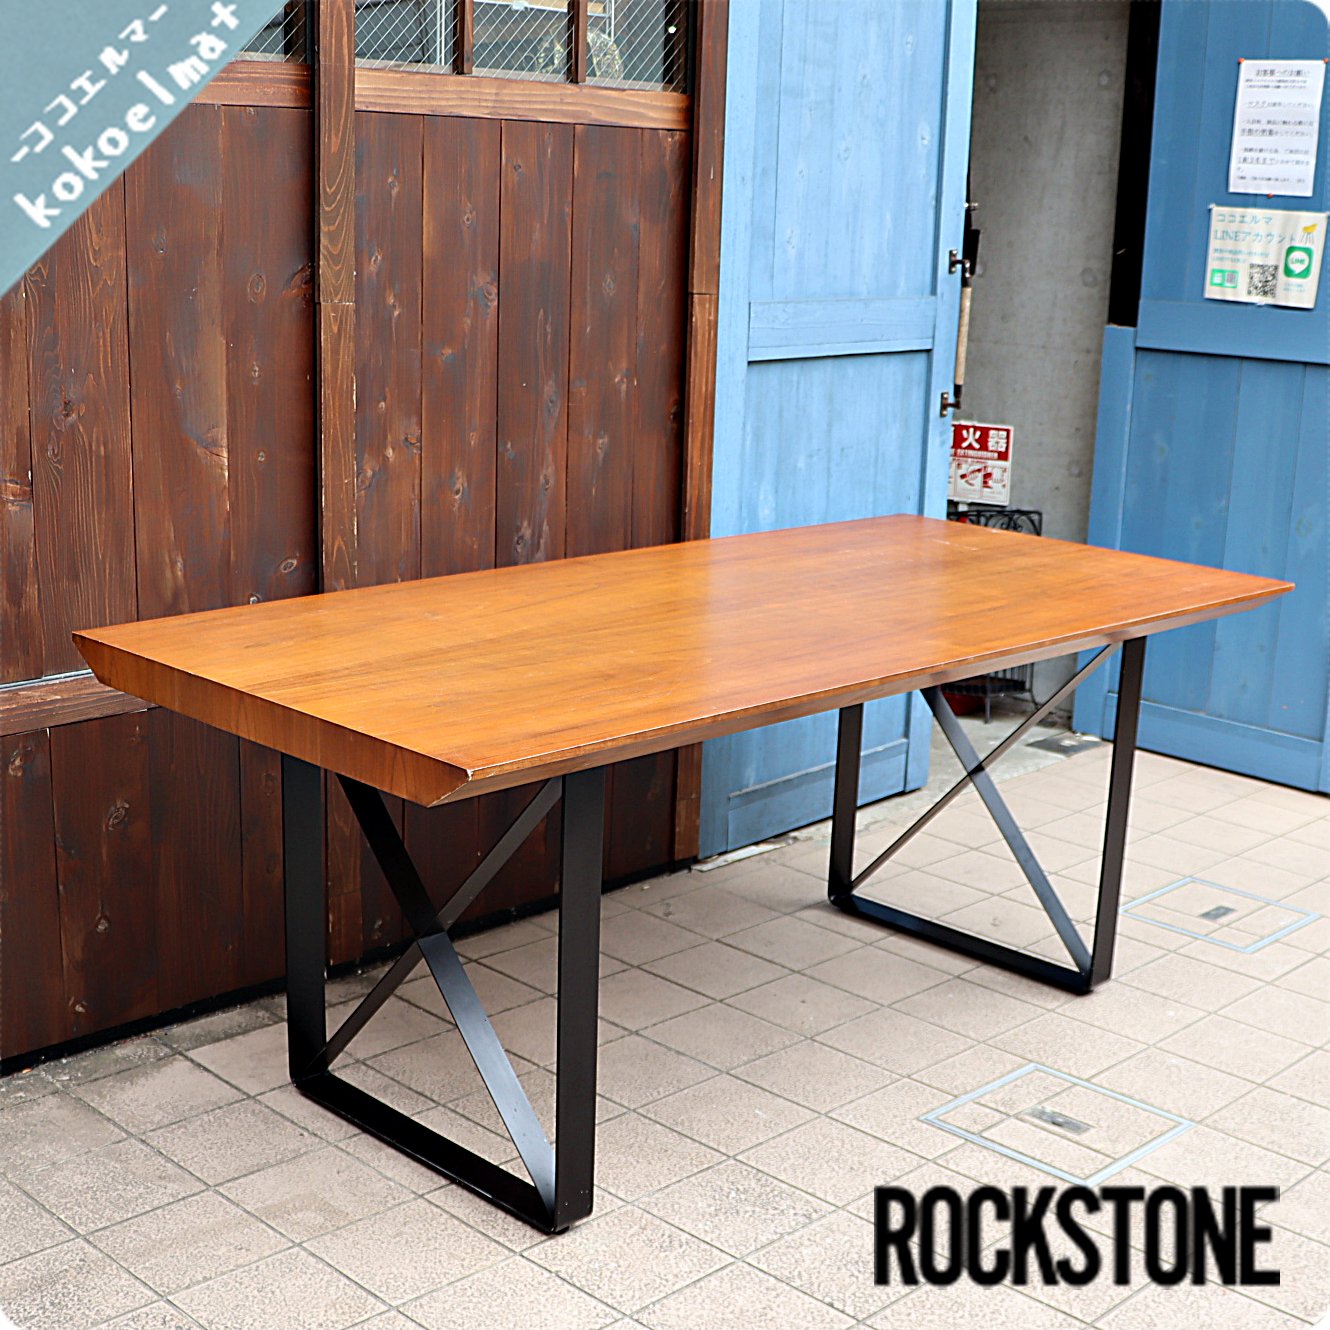 ROCKSTONE(ロックストーン)の岩倉榮利デザインPM605 KIZA(キザ 